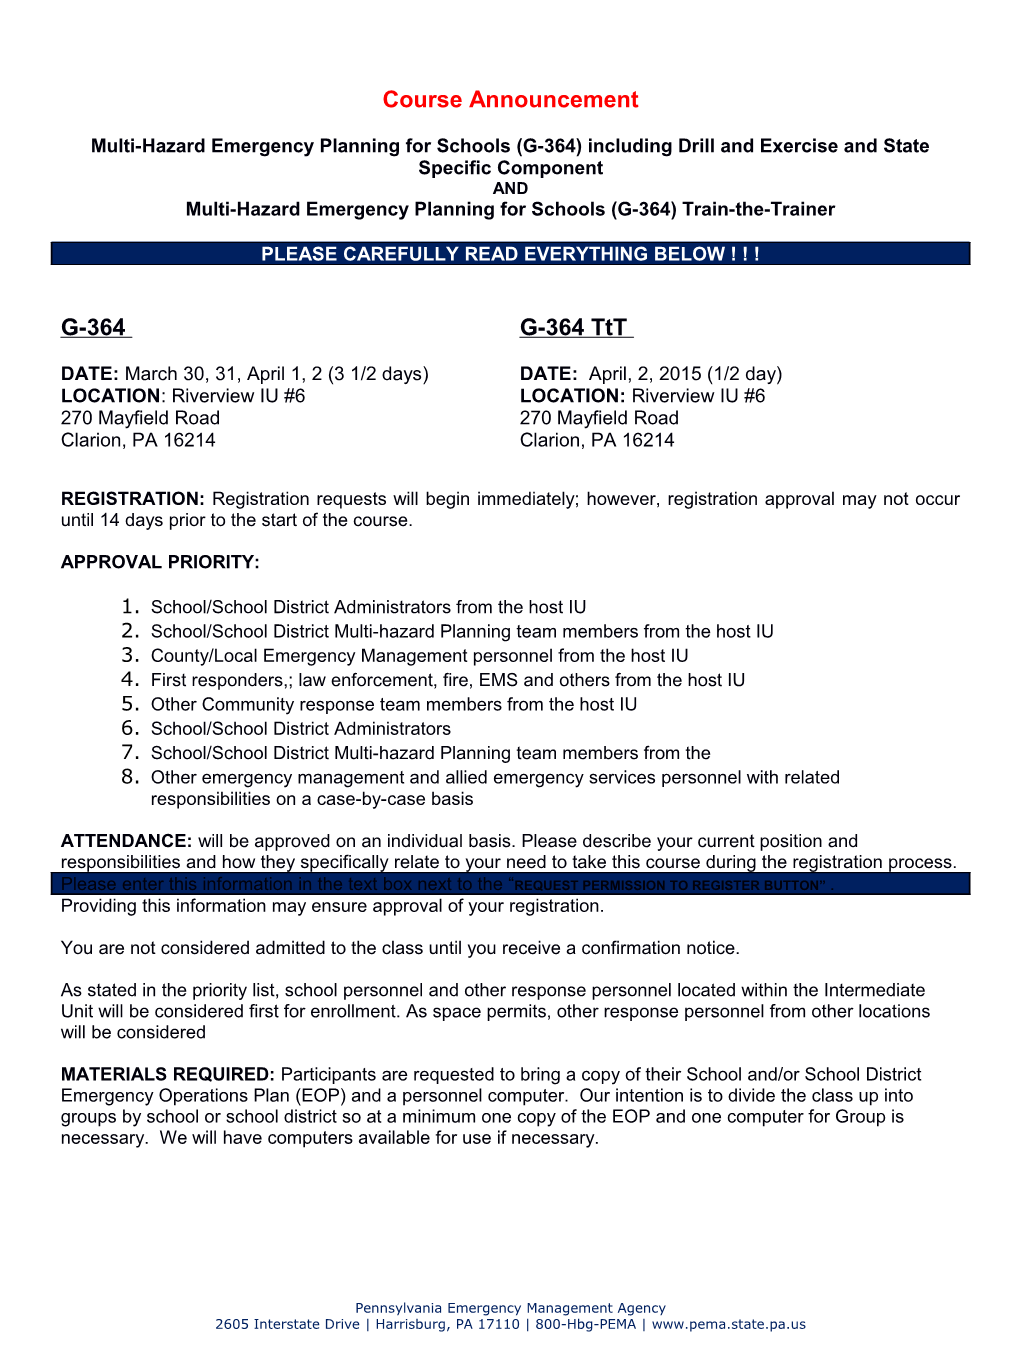 Multi-Hazard Emergency Planning for Schools (G-364) Train-The-Trainer